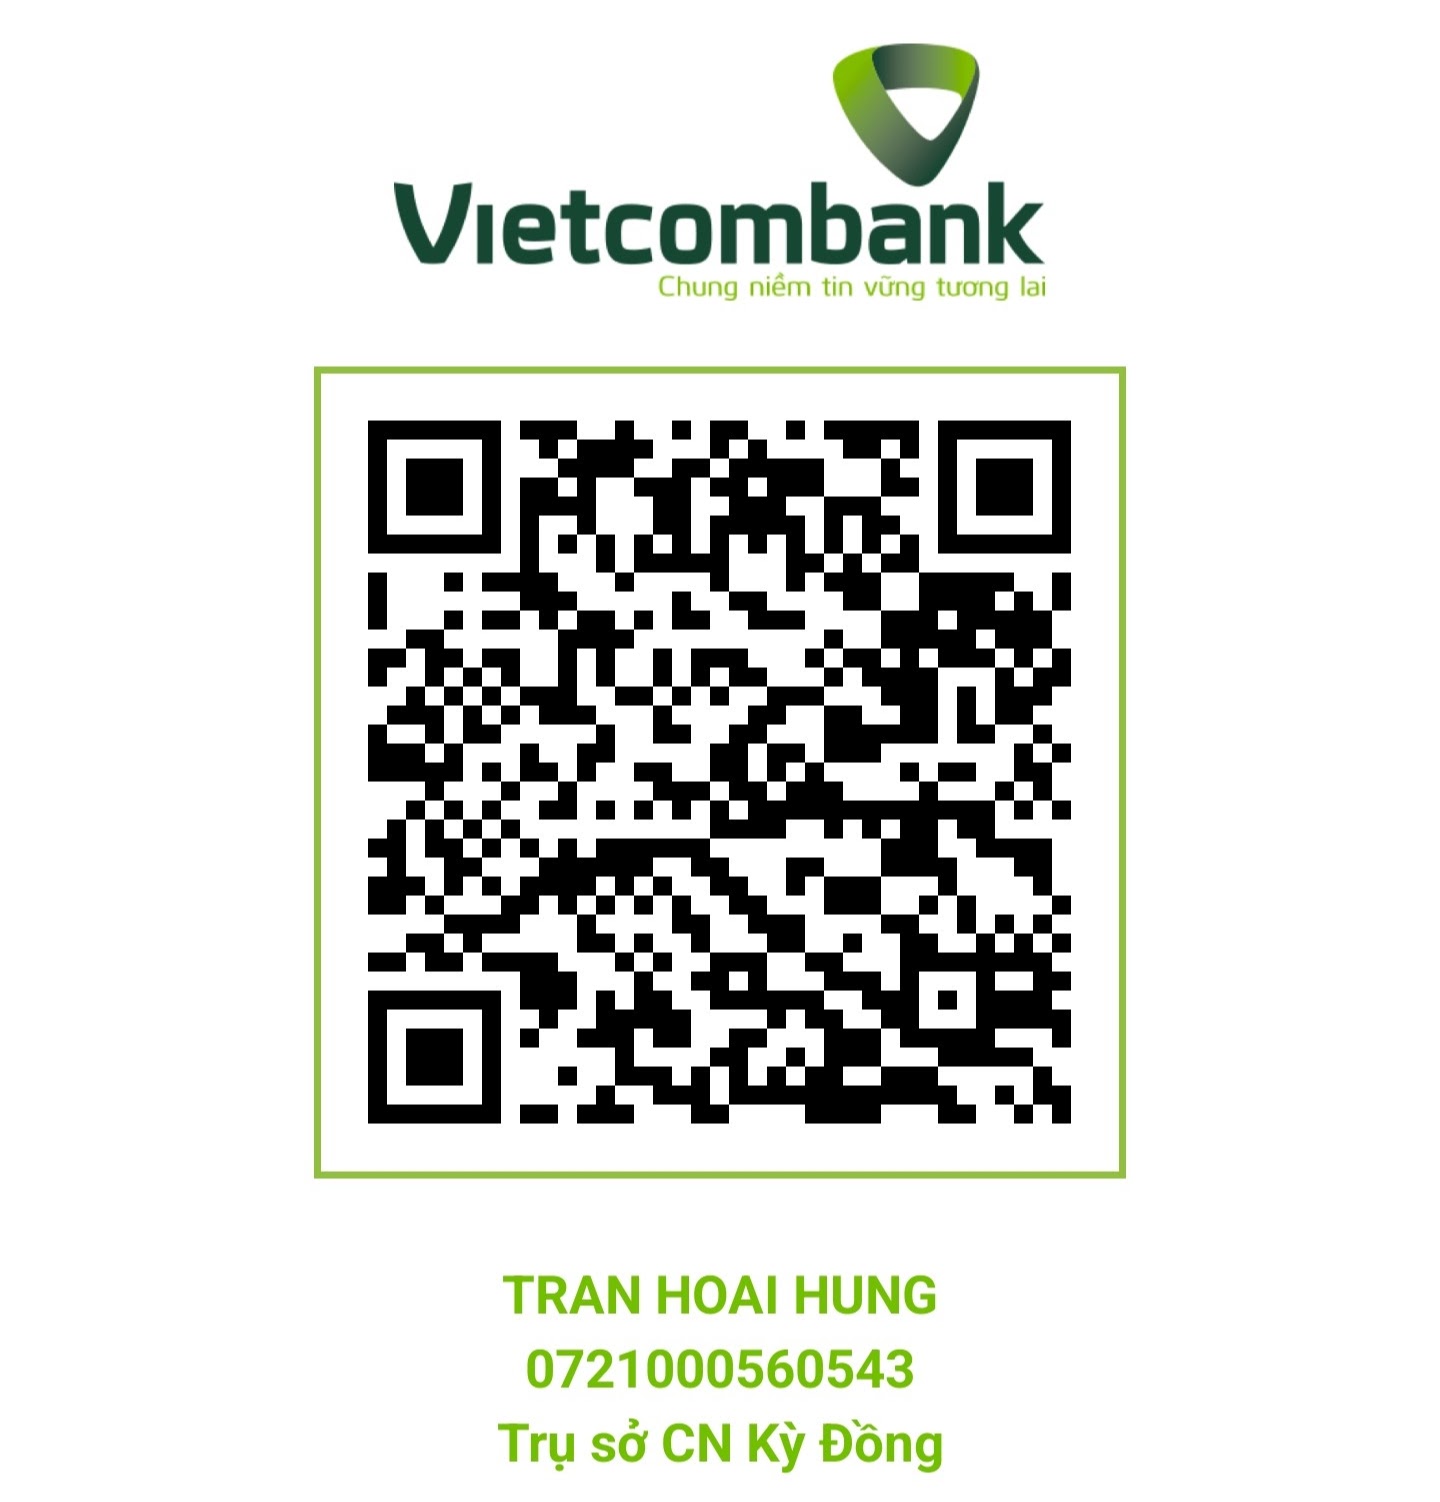 Vietcombank bbd41329 7c1b 48b4 9857 655be1f62759